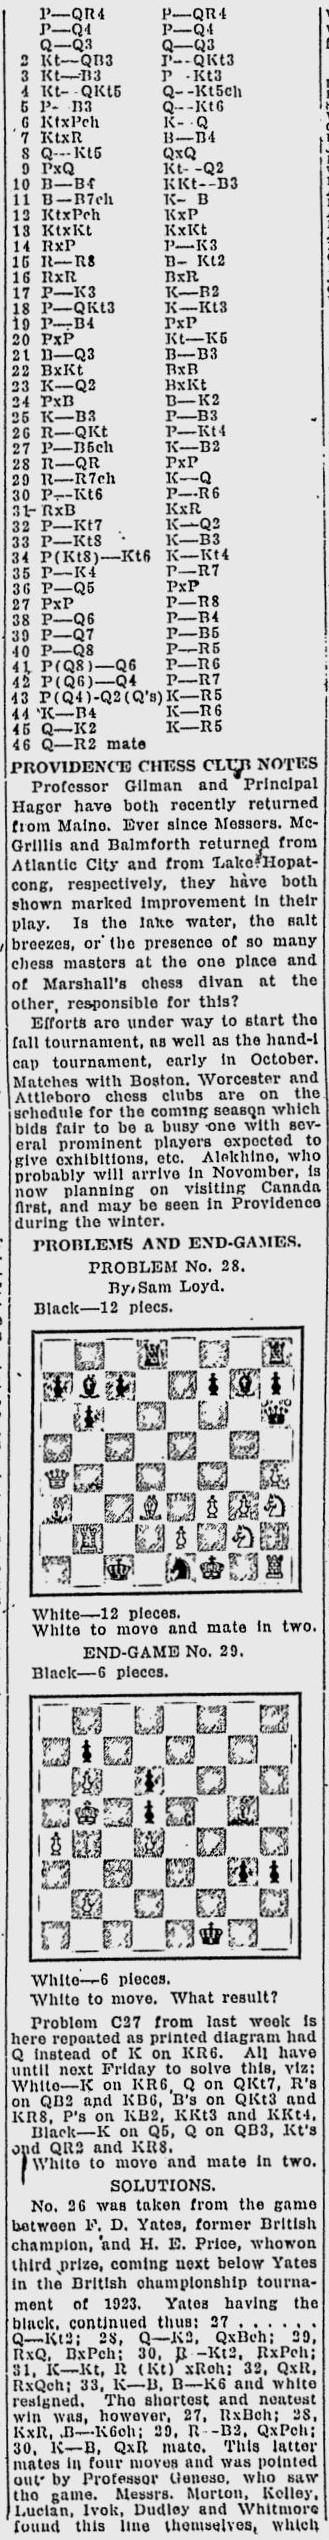 1923.09.29-03 Providence News.jpg